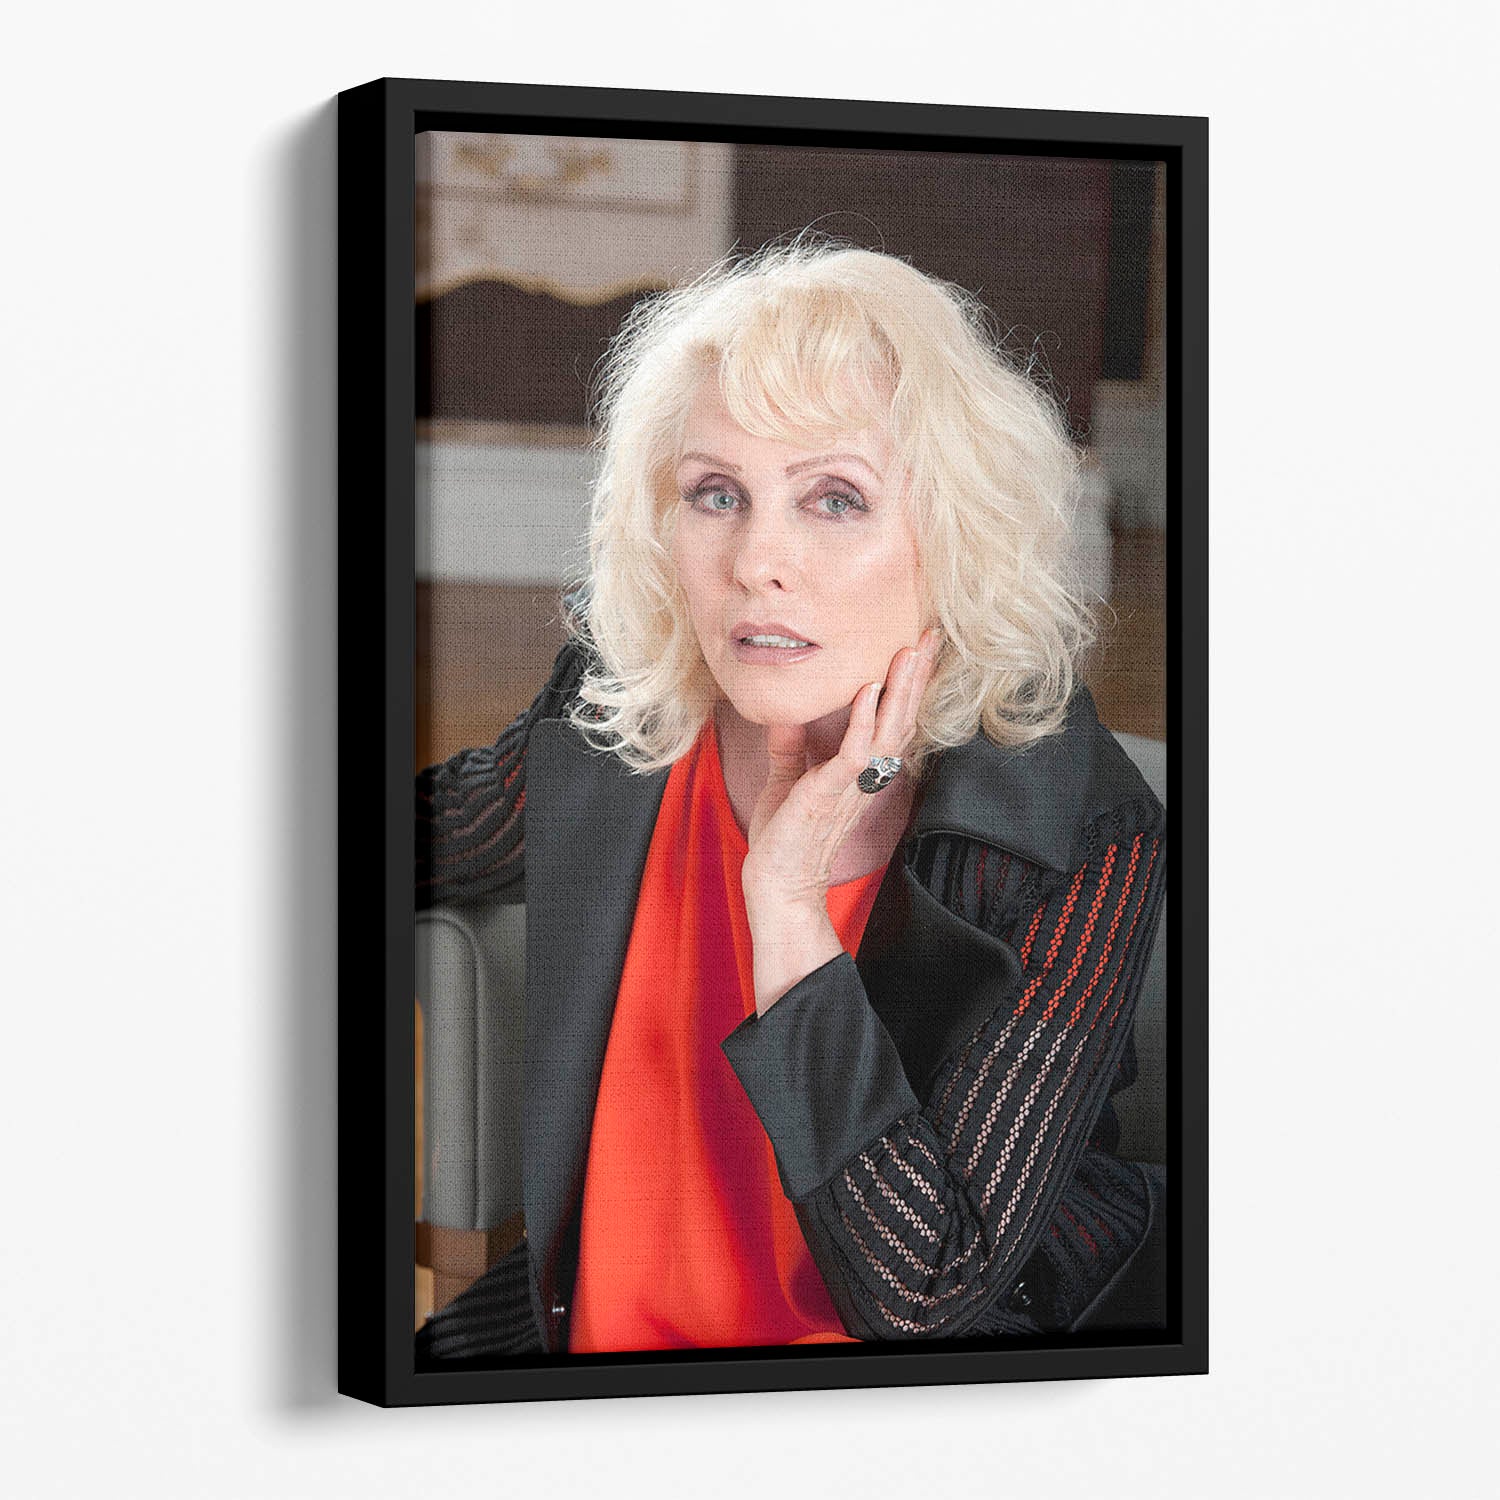 Debbie Harry in 2014 Floating Framed Canvas